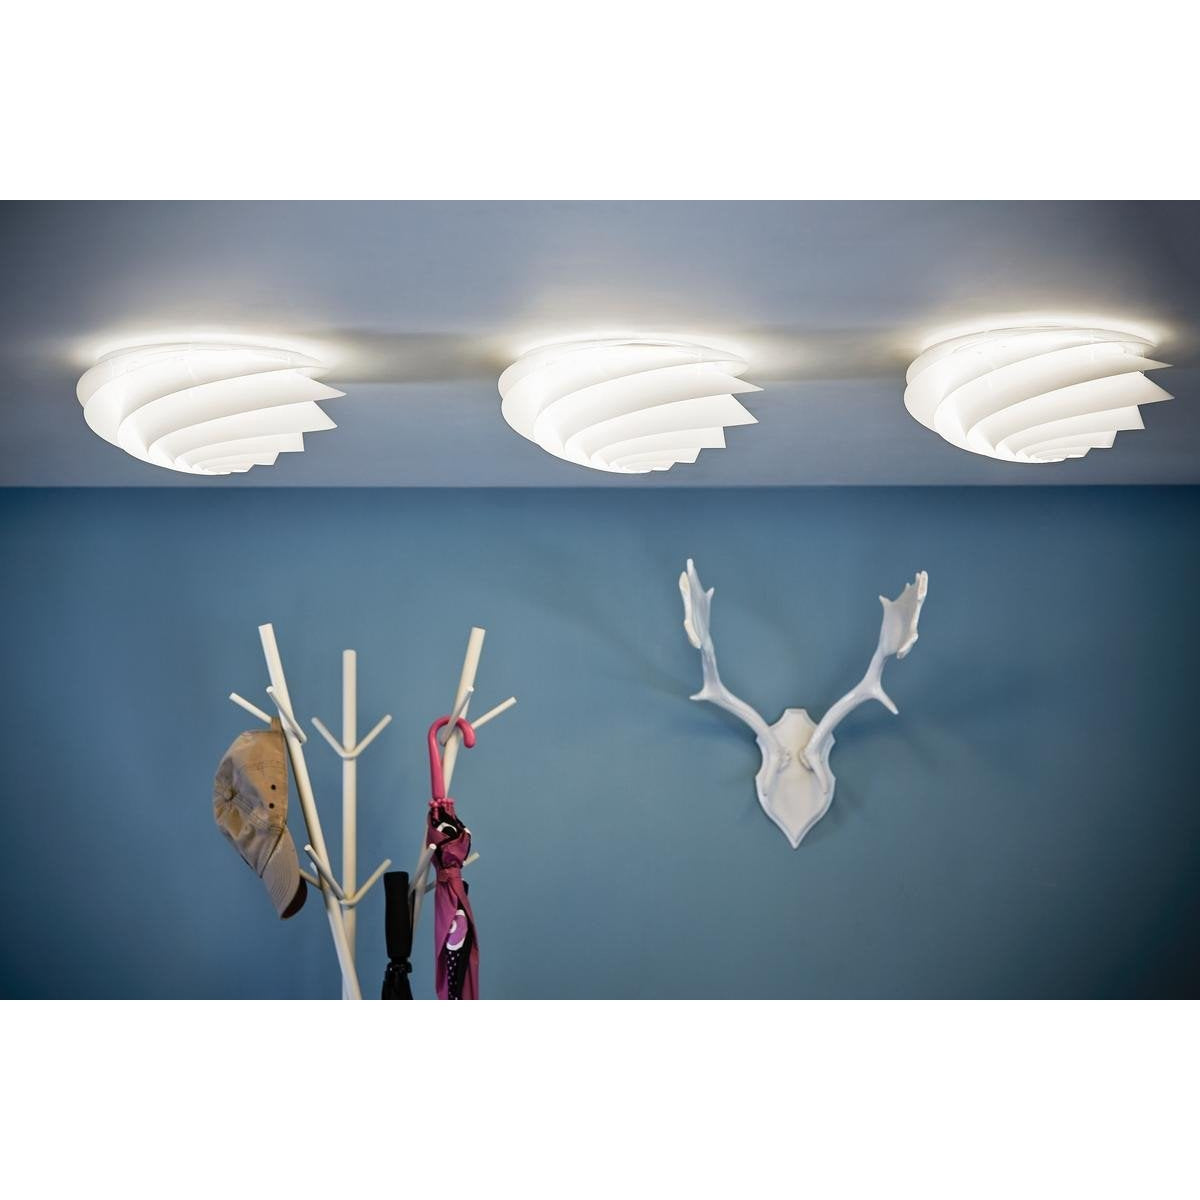 Le Klint Swirl Wall/Ceiling Lamp, White ø37 Cm